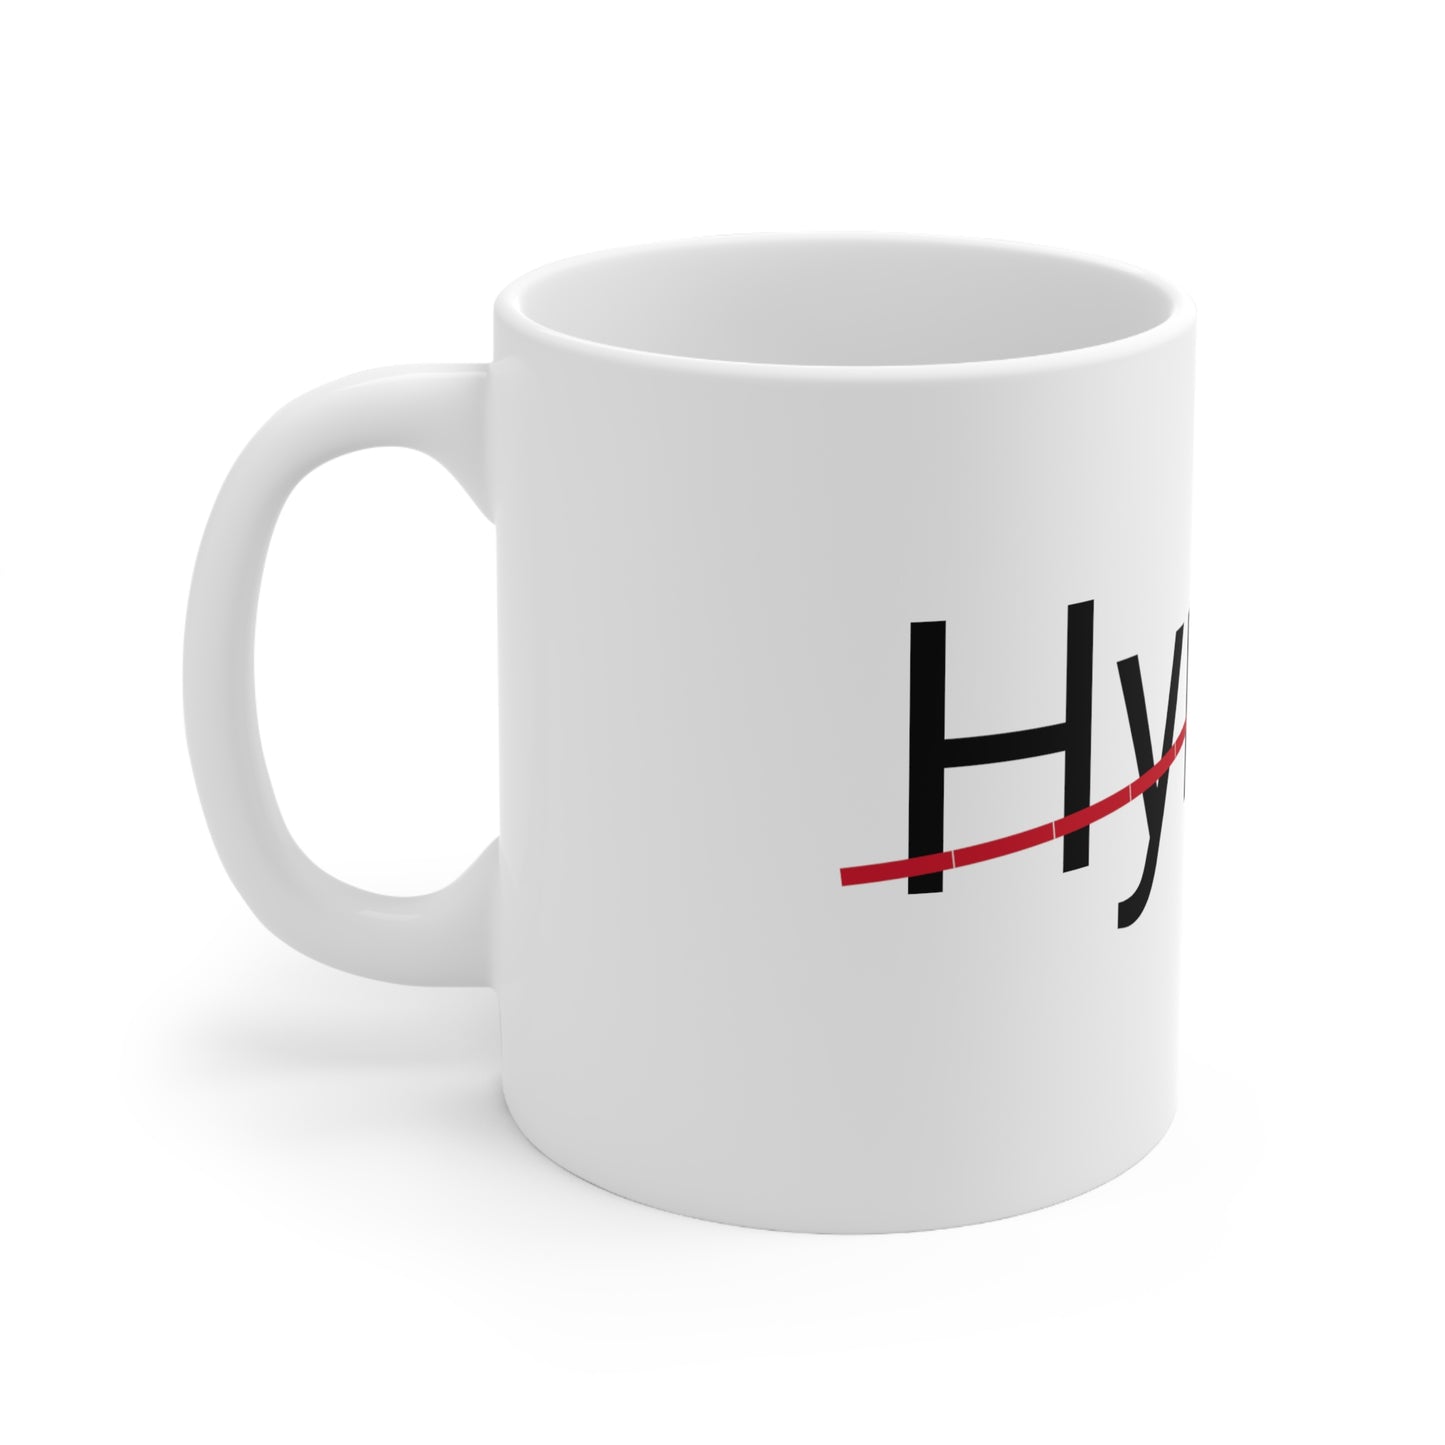 Hyrum is not my name Ceramic Mug 11oz